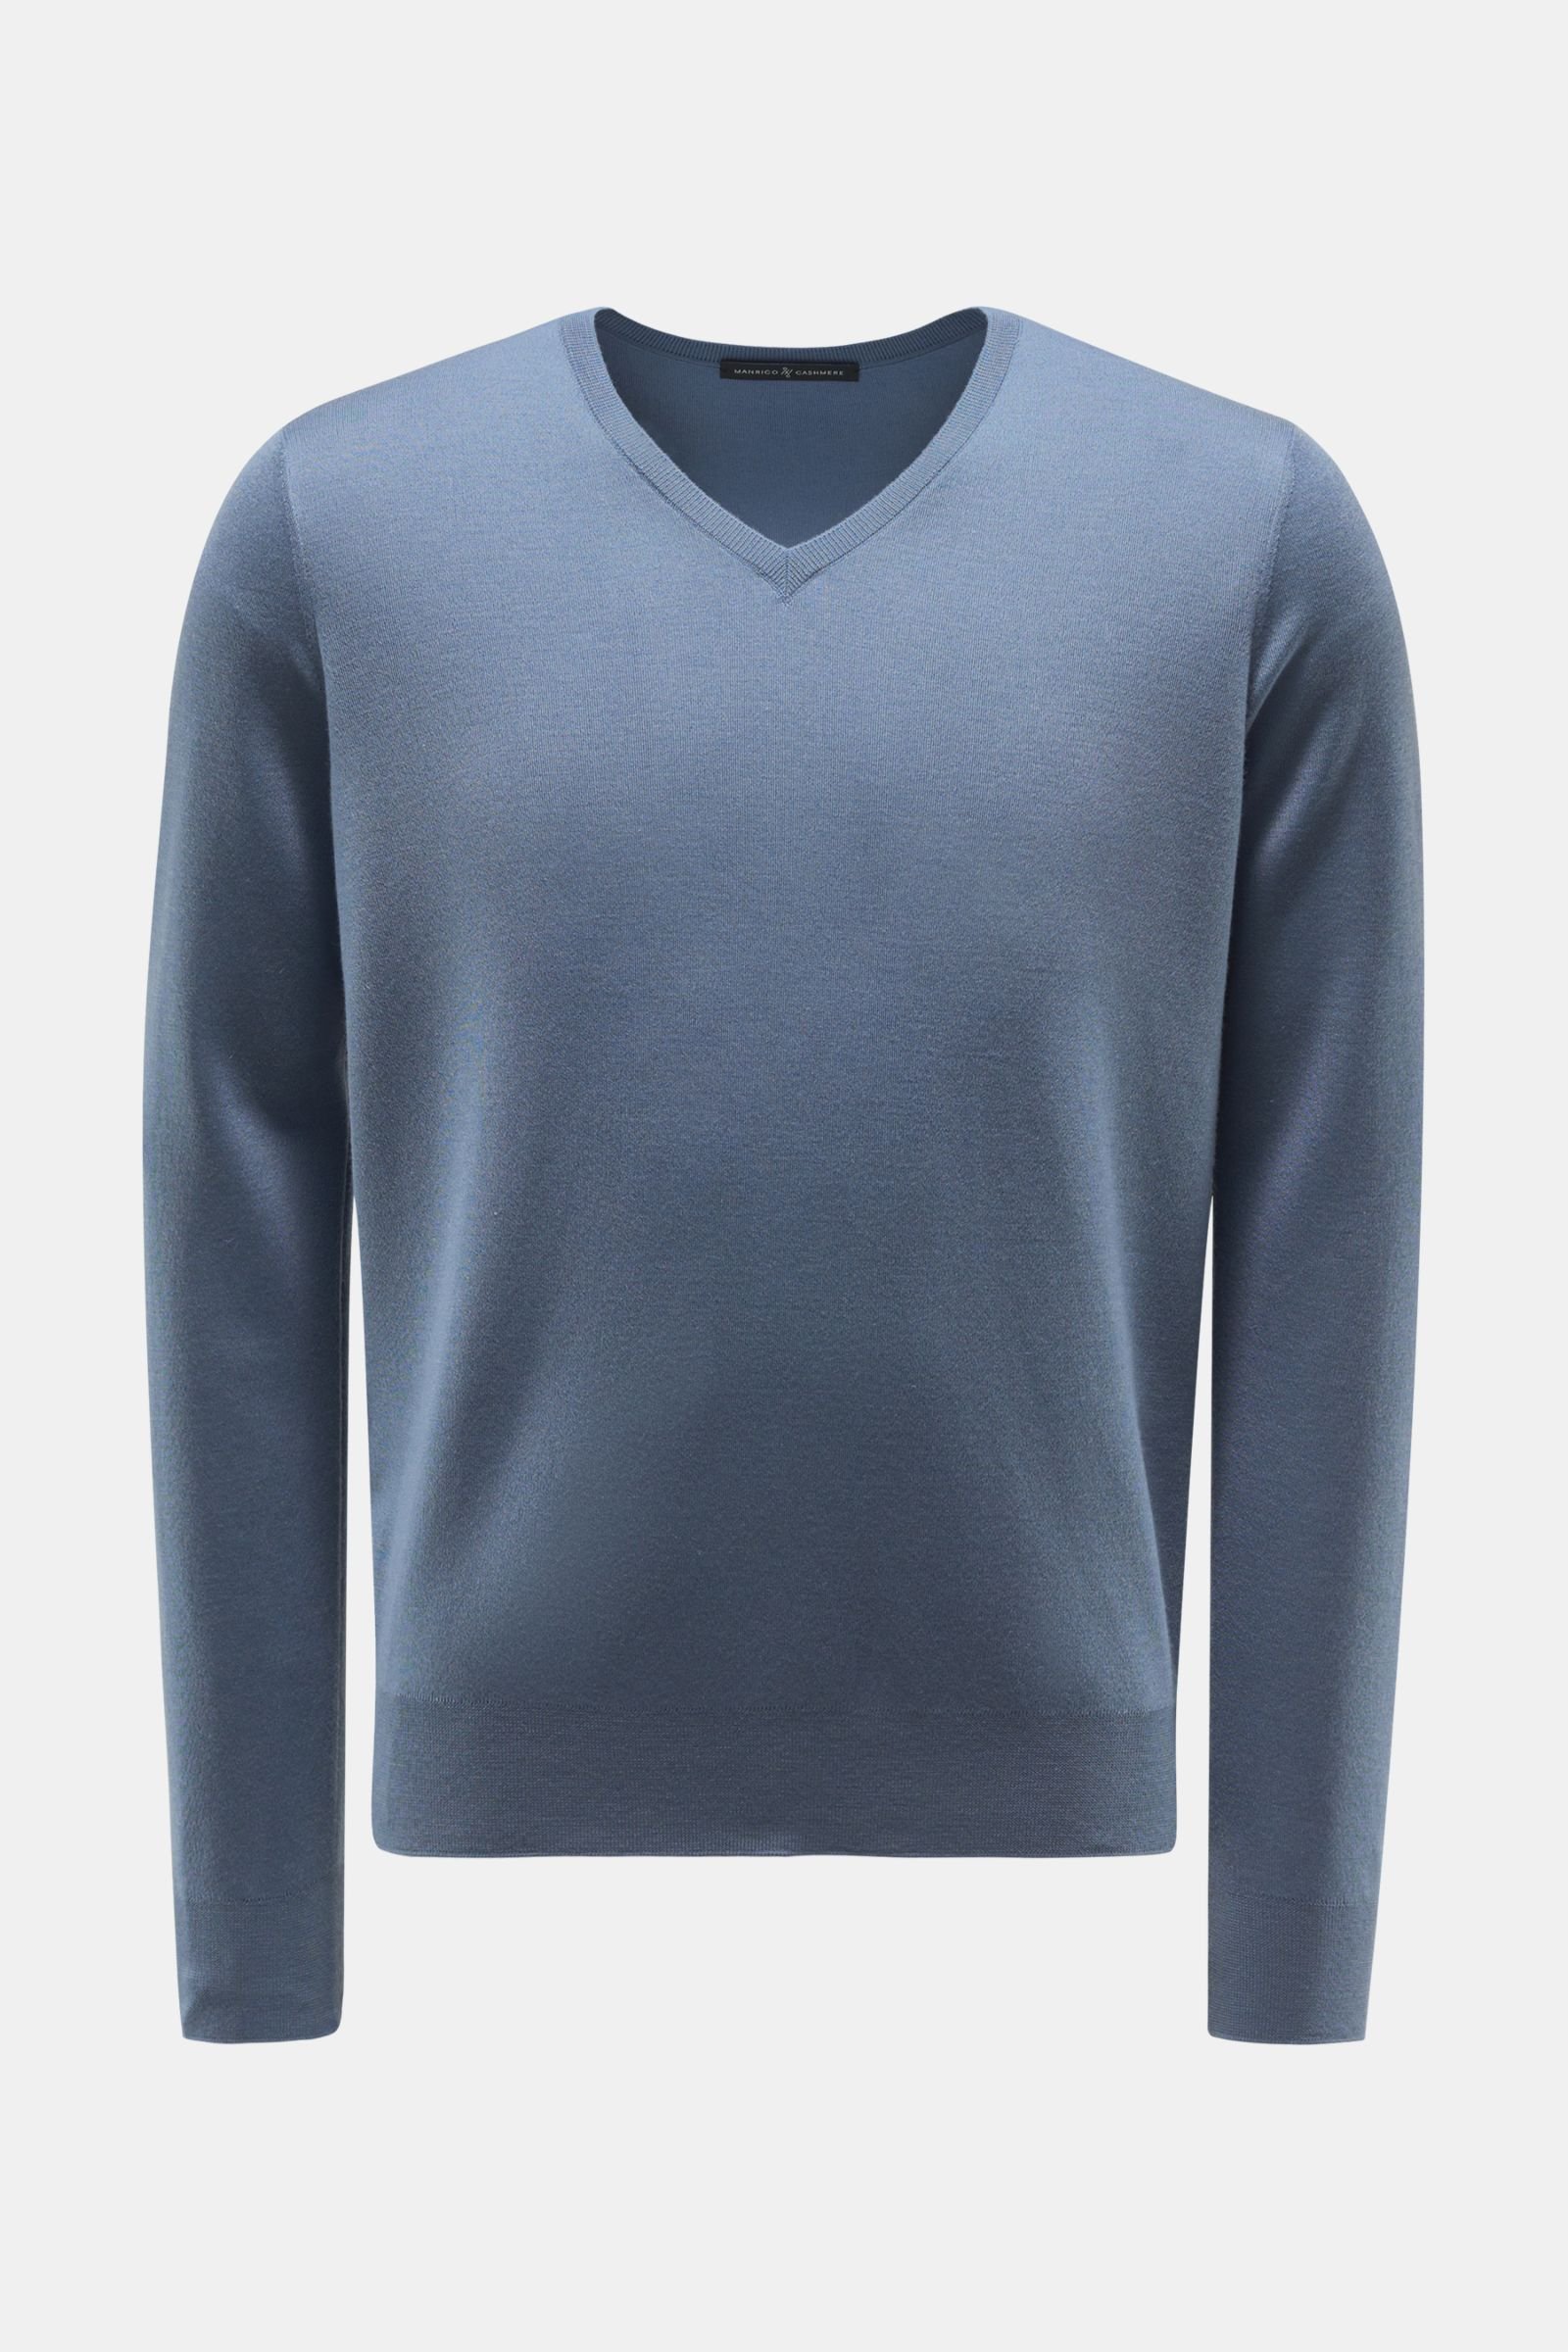 Cashmere fine knit jumper grey-blue